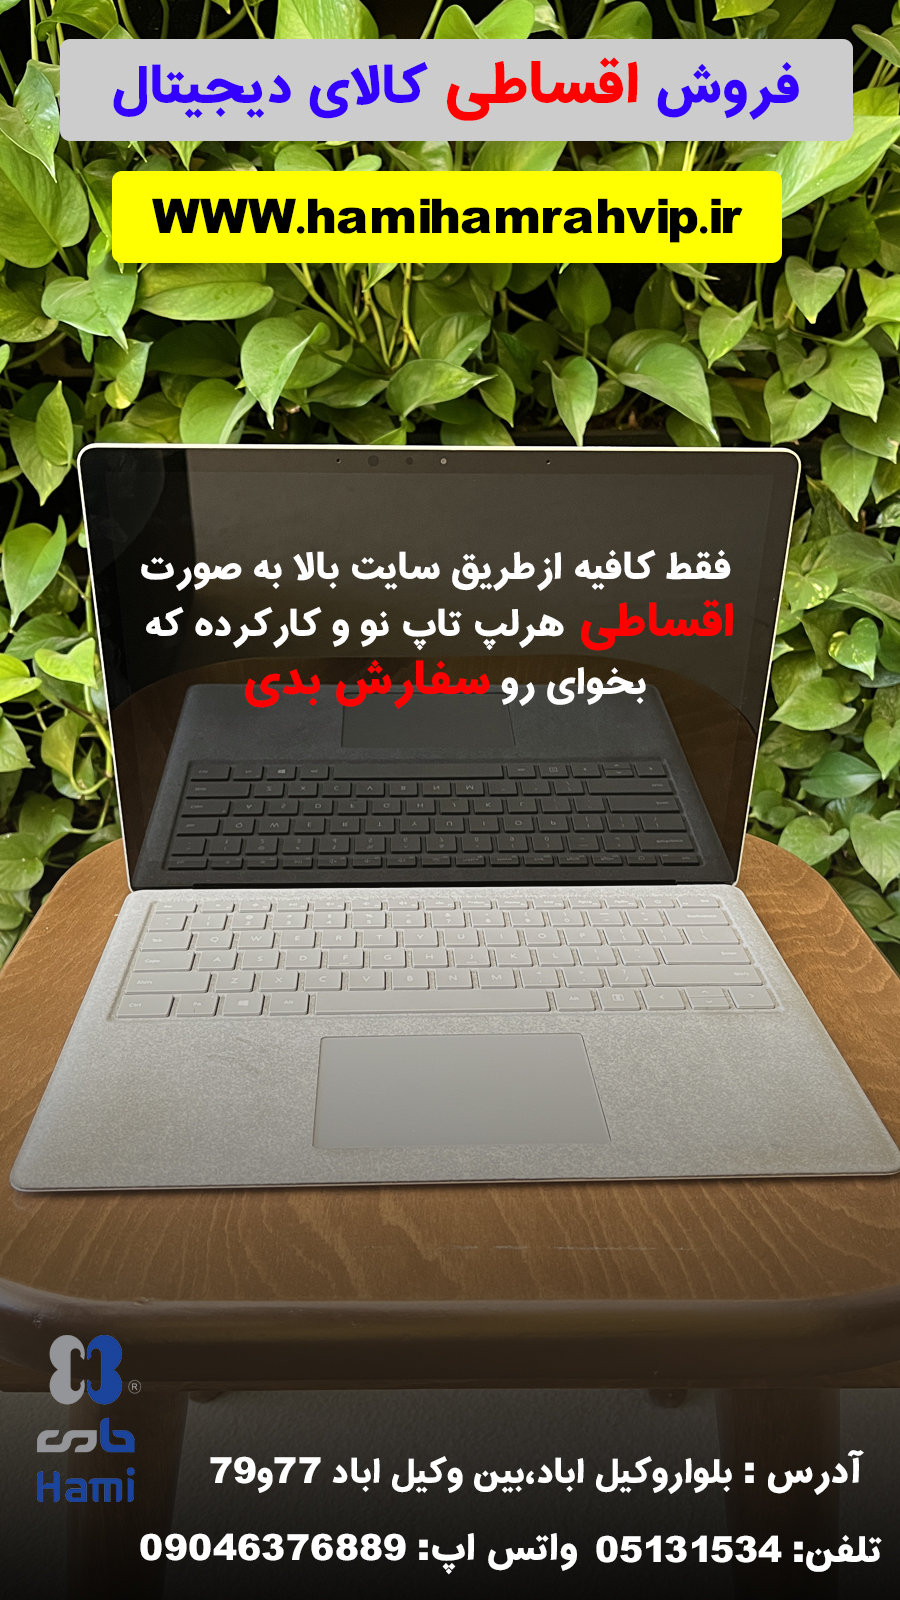 فروش ویژه لپ تاپ اقساطی www.hamihamrahvip.ir